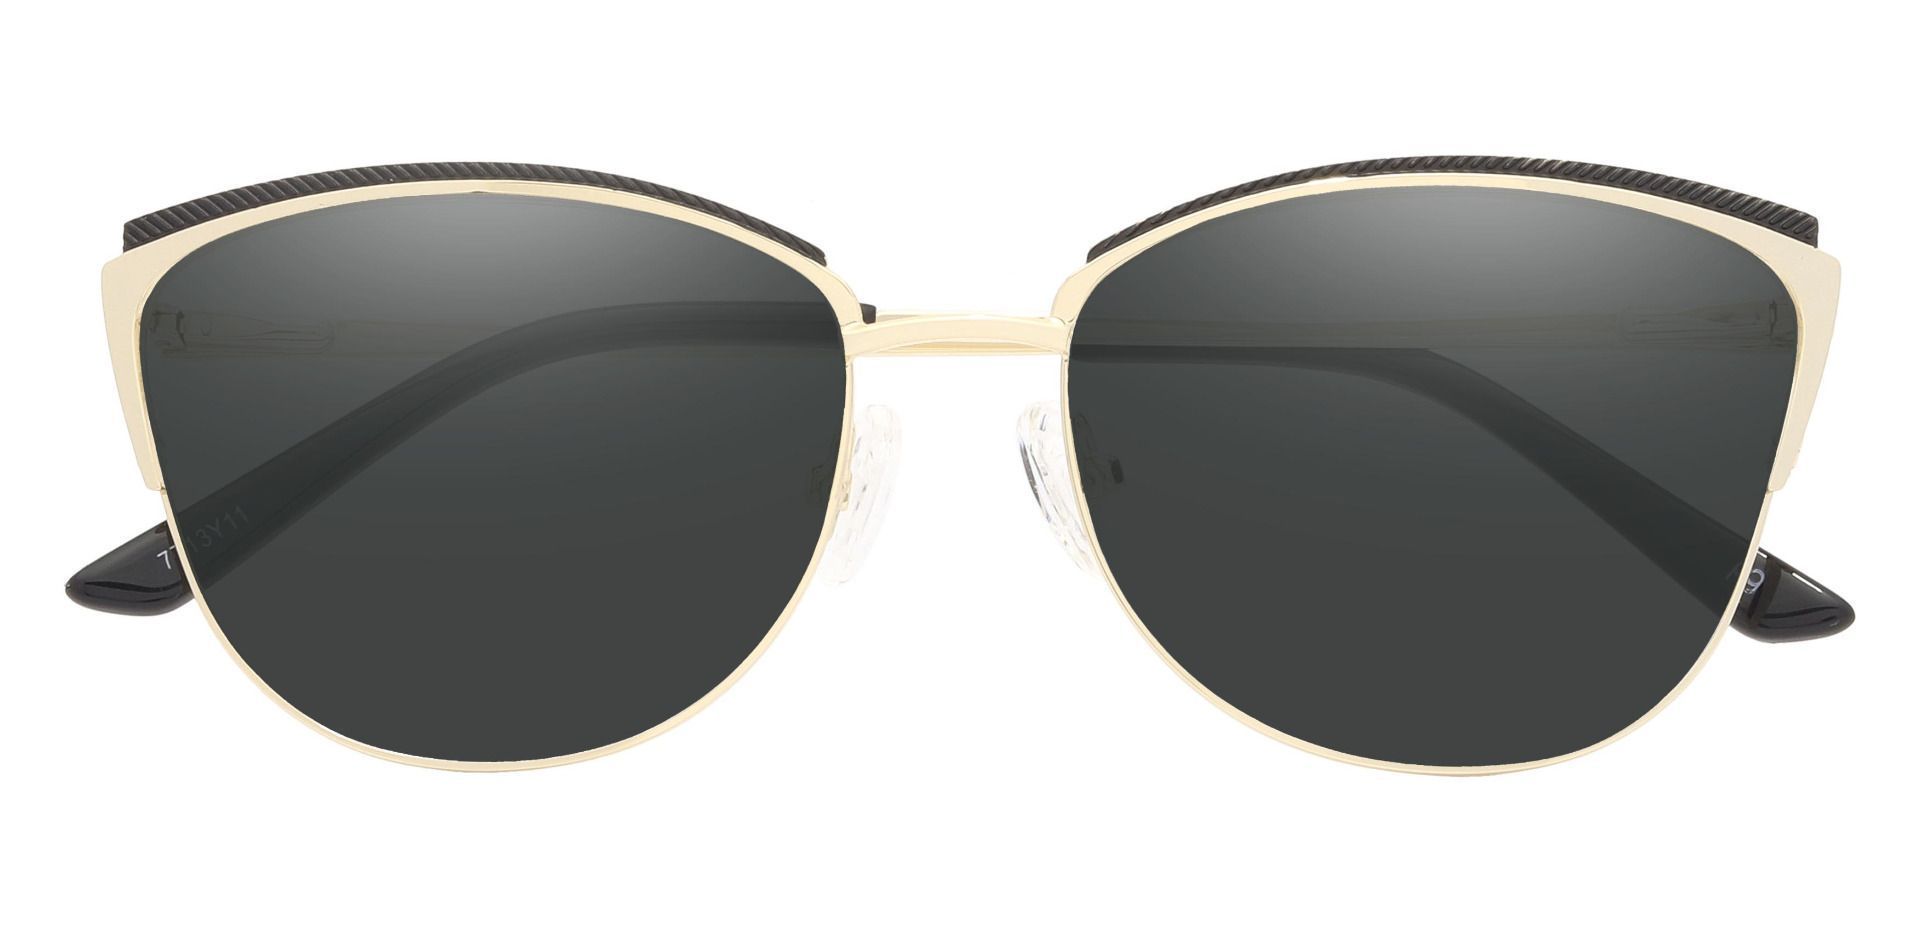 Magnolia Cat Eye Prescription Sunglasses - Gold Frame With Gray Lenses